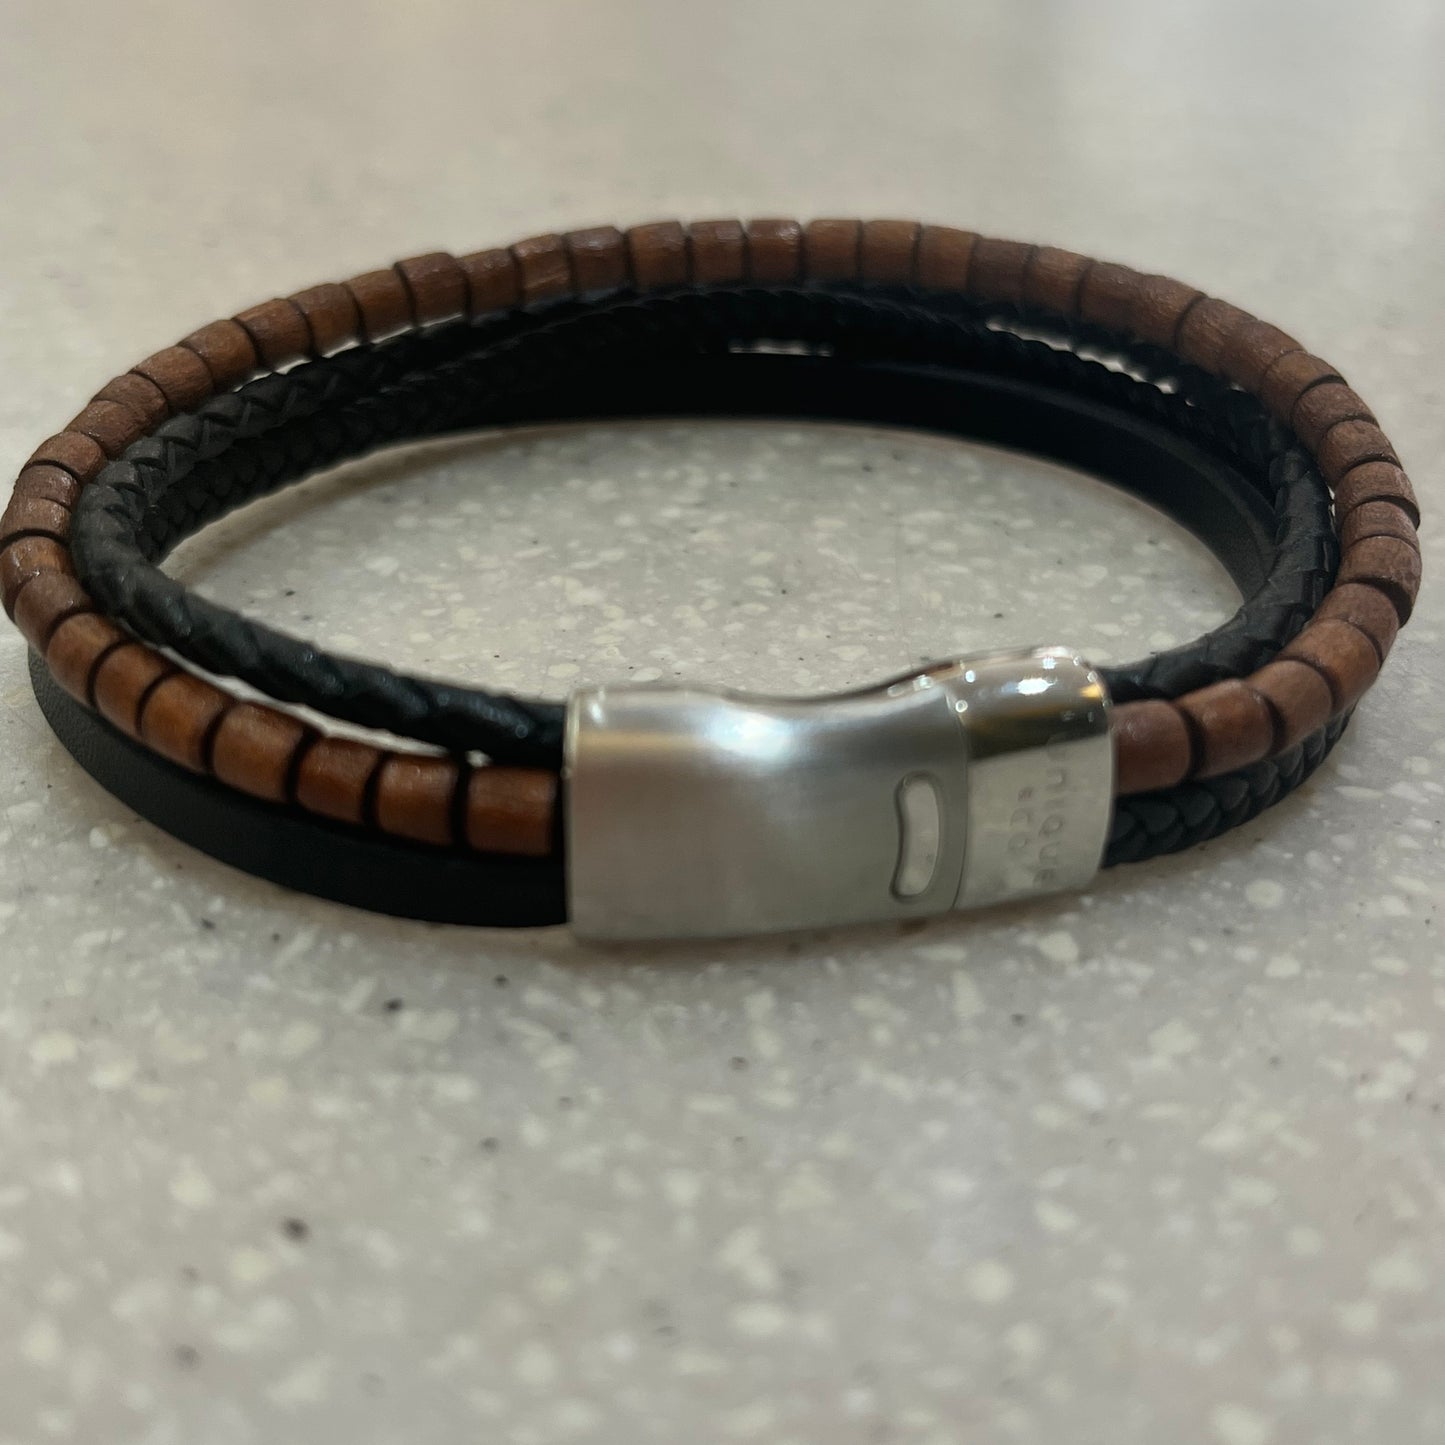 Unique Black Leather Bracelet with Wood Beads